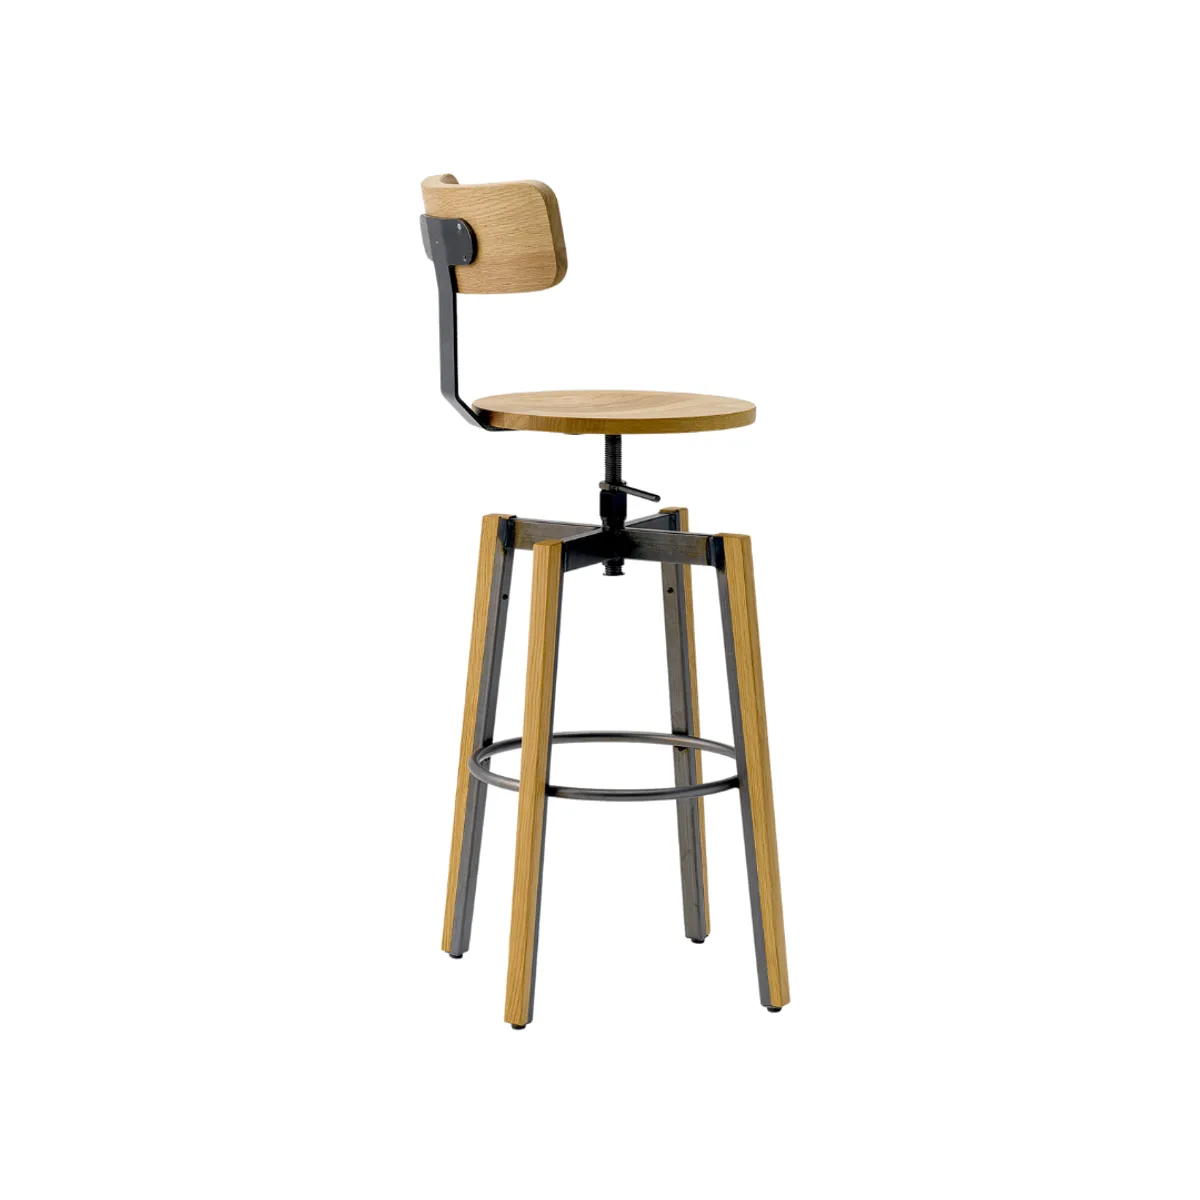 Fiasco Hybrid bar stool